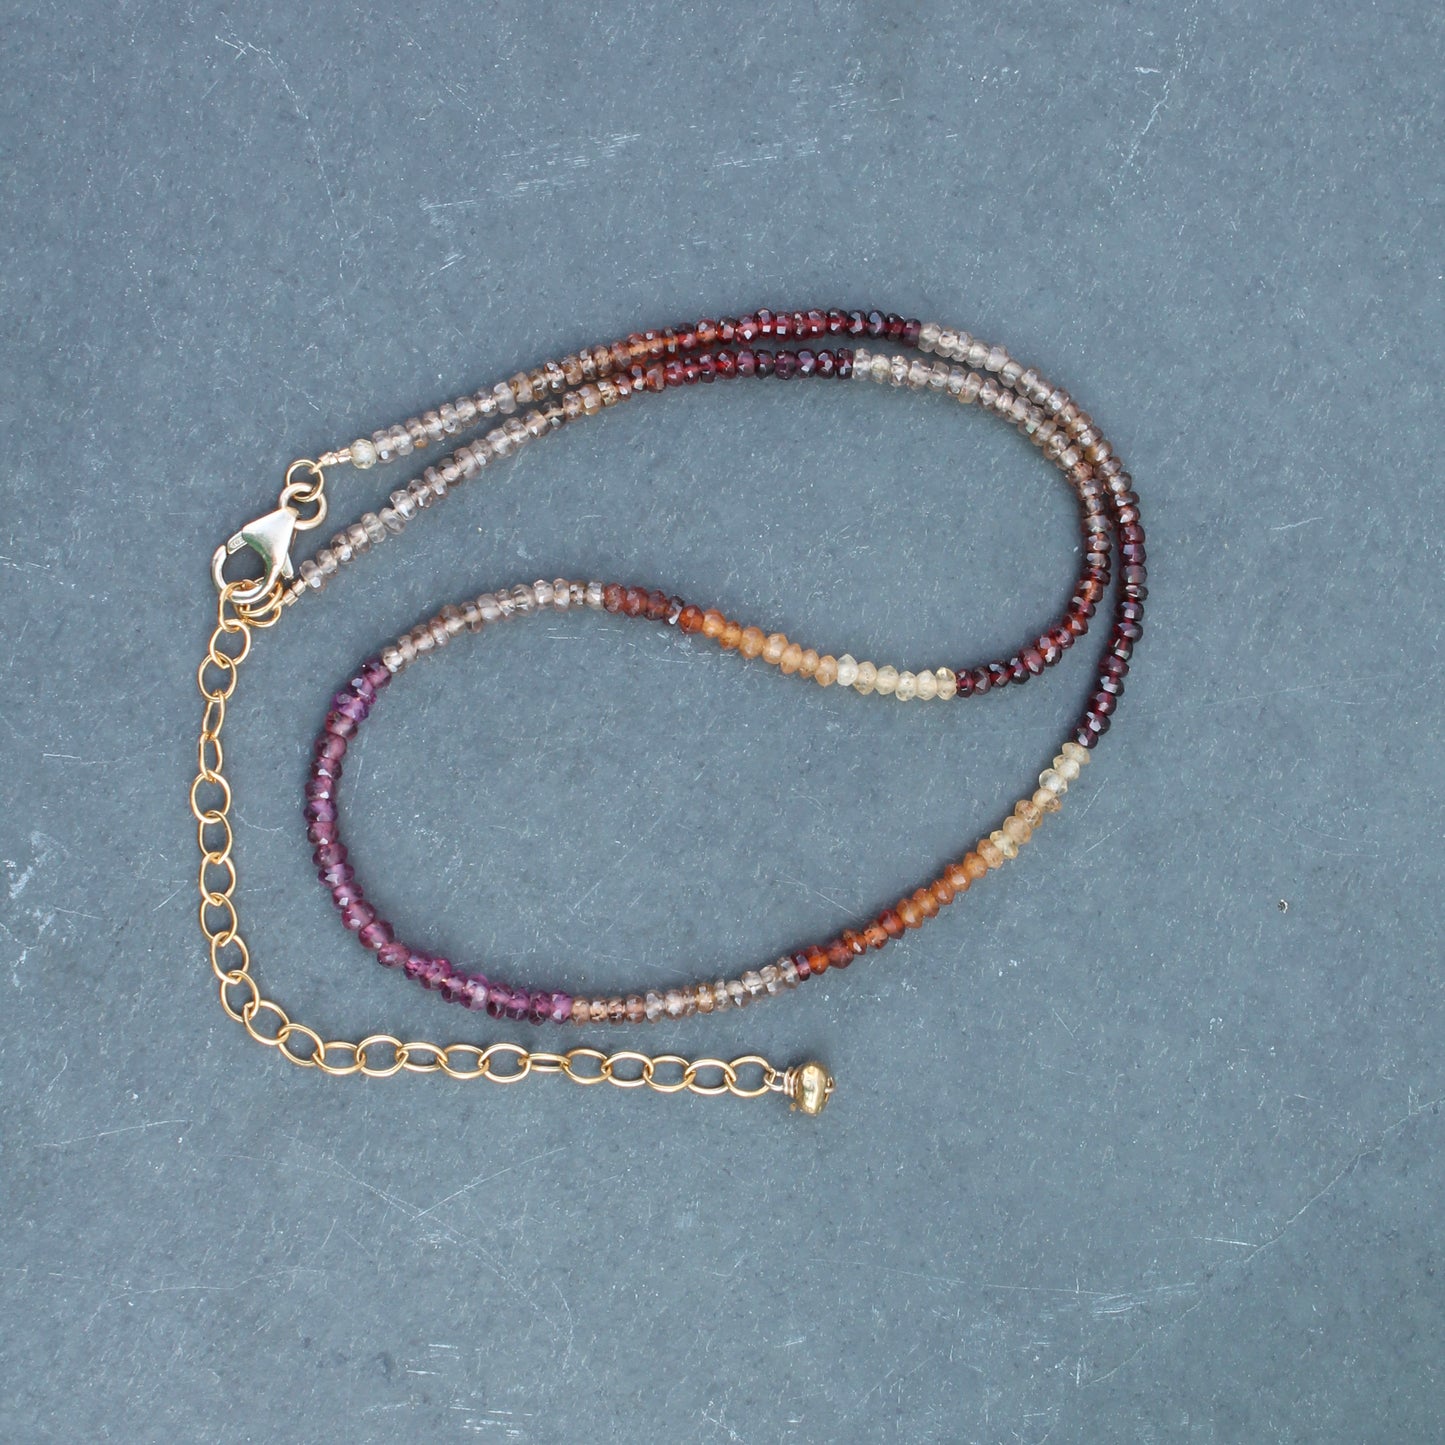 Tundru Sapphire Necklace